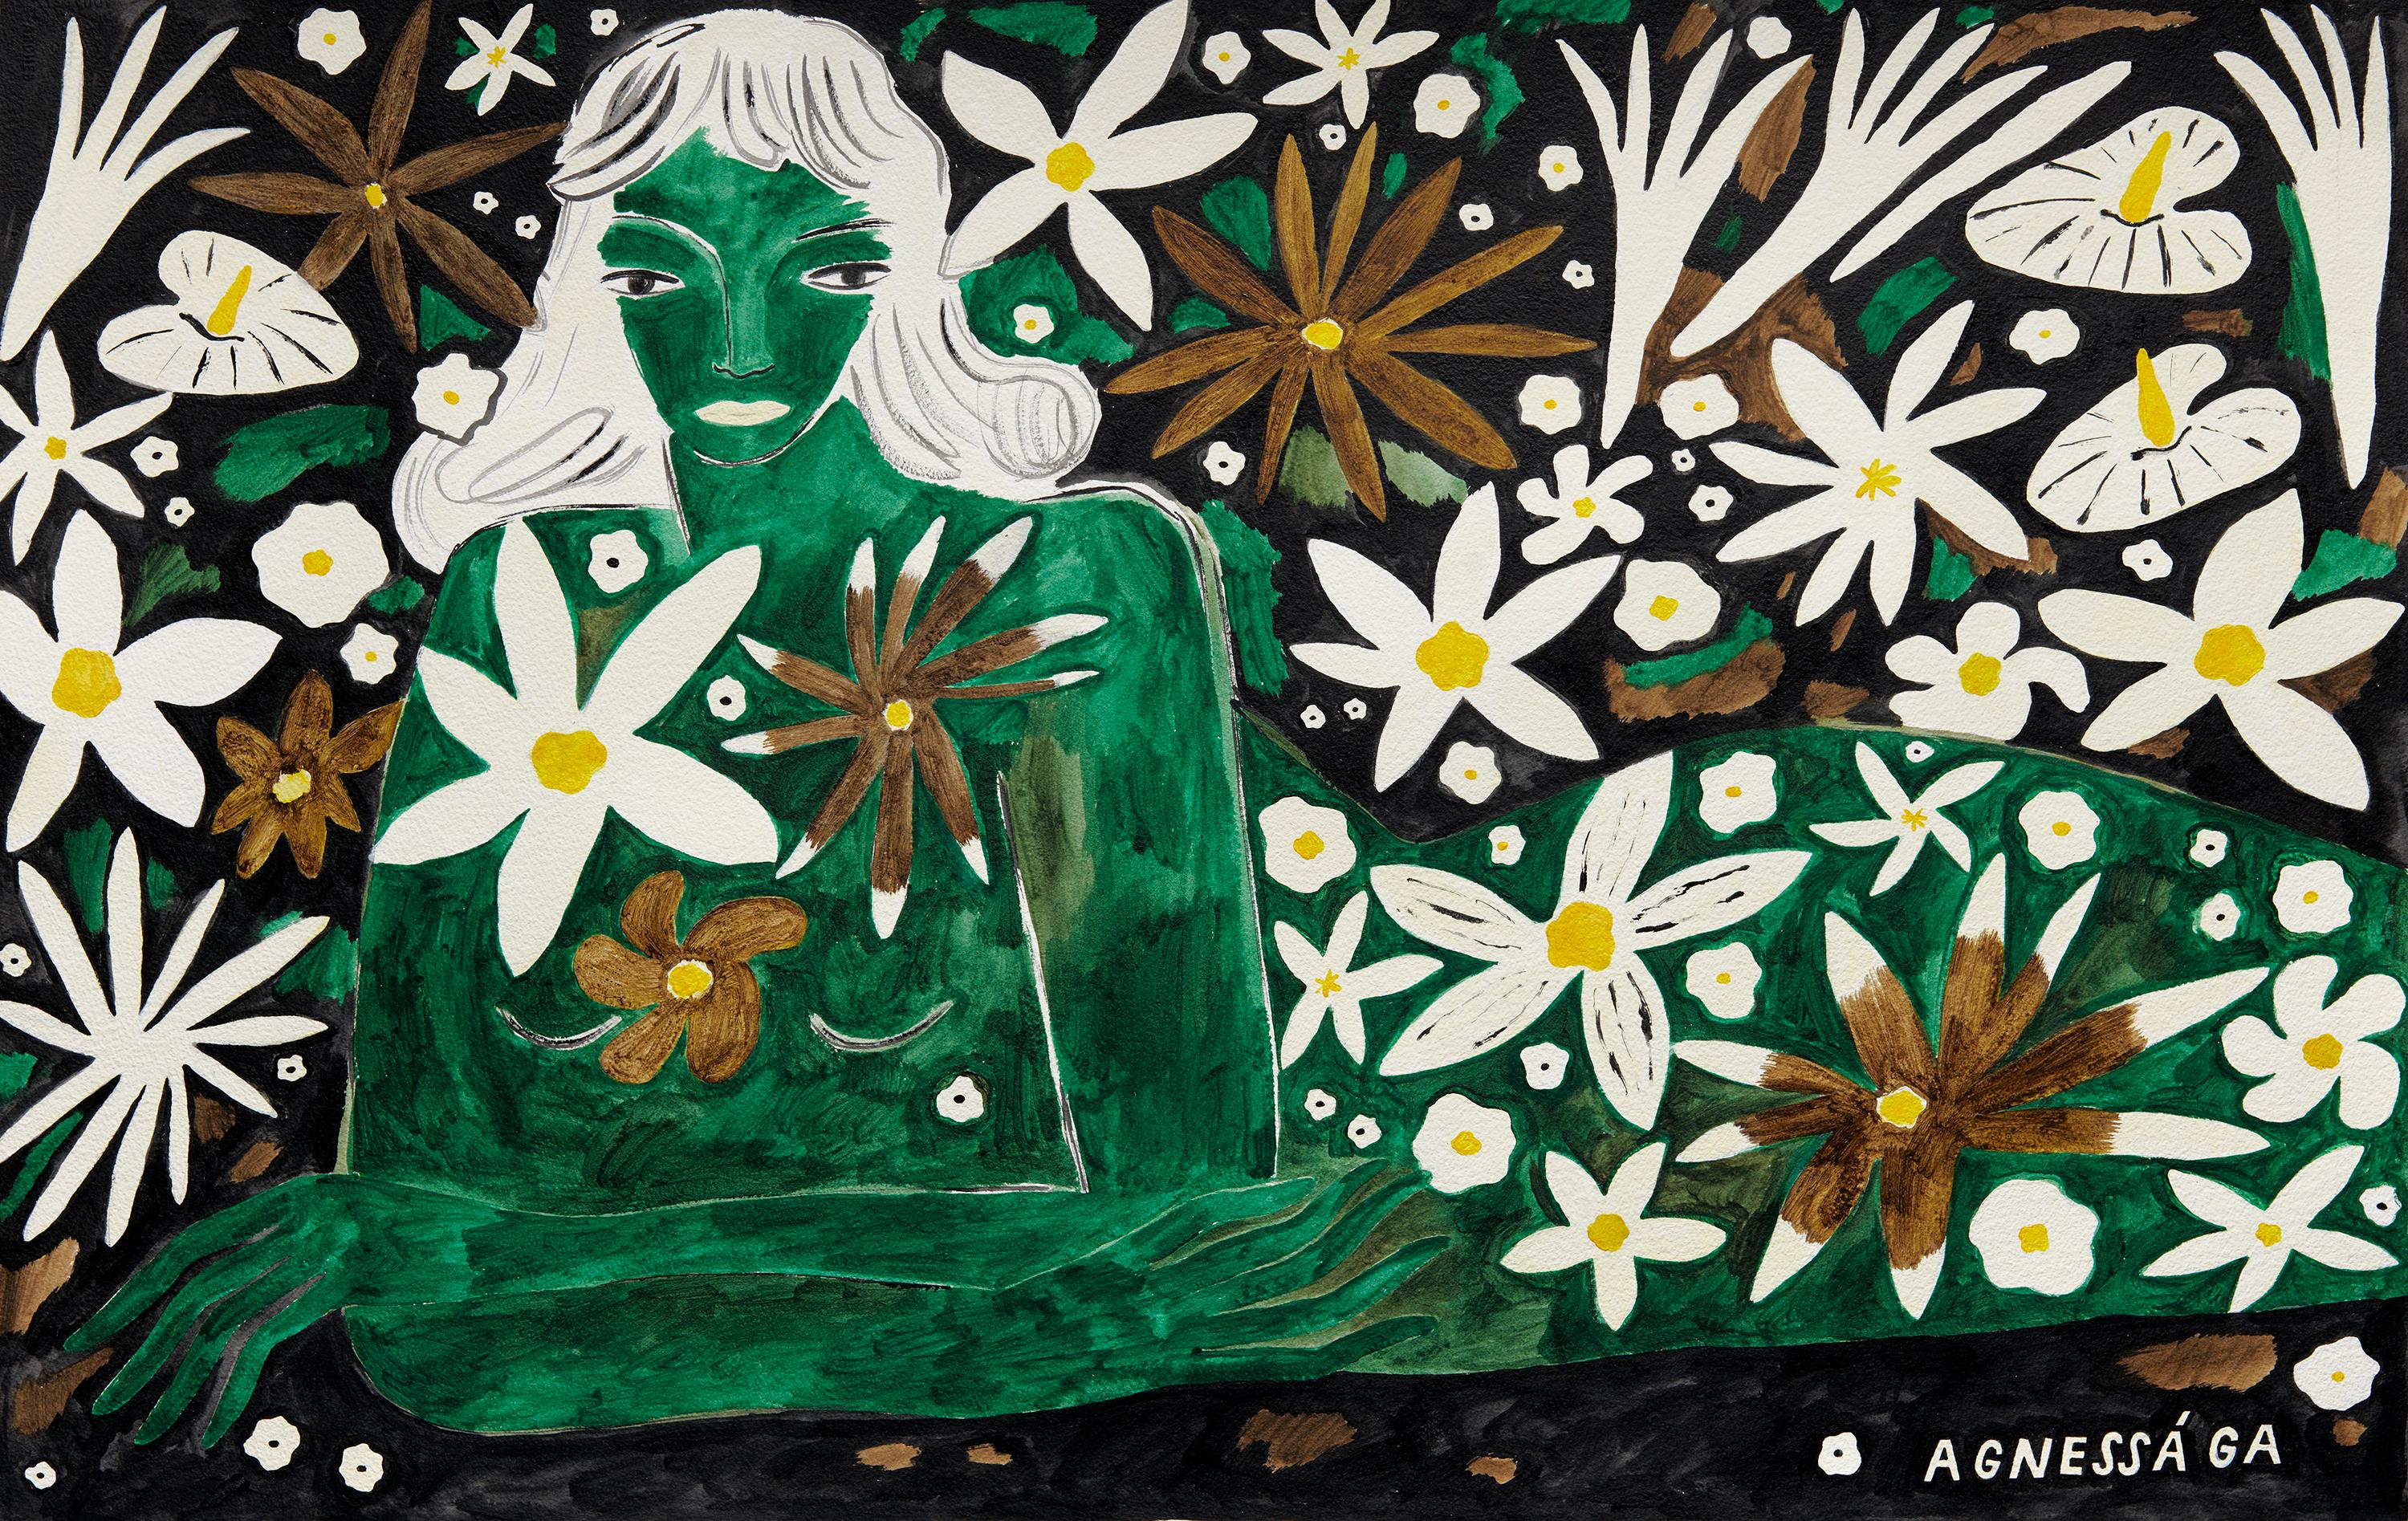 Agnese Negriba Figurative Painting - Green Garden Spirit, Floral Figurative Contemporary Original painting